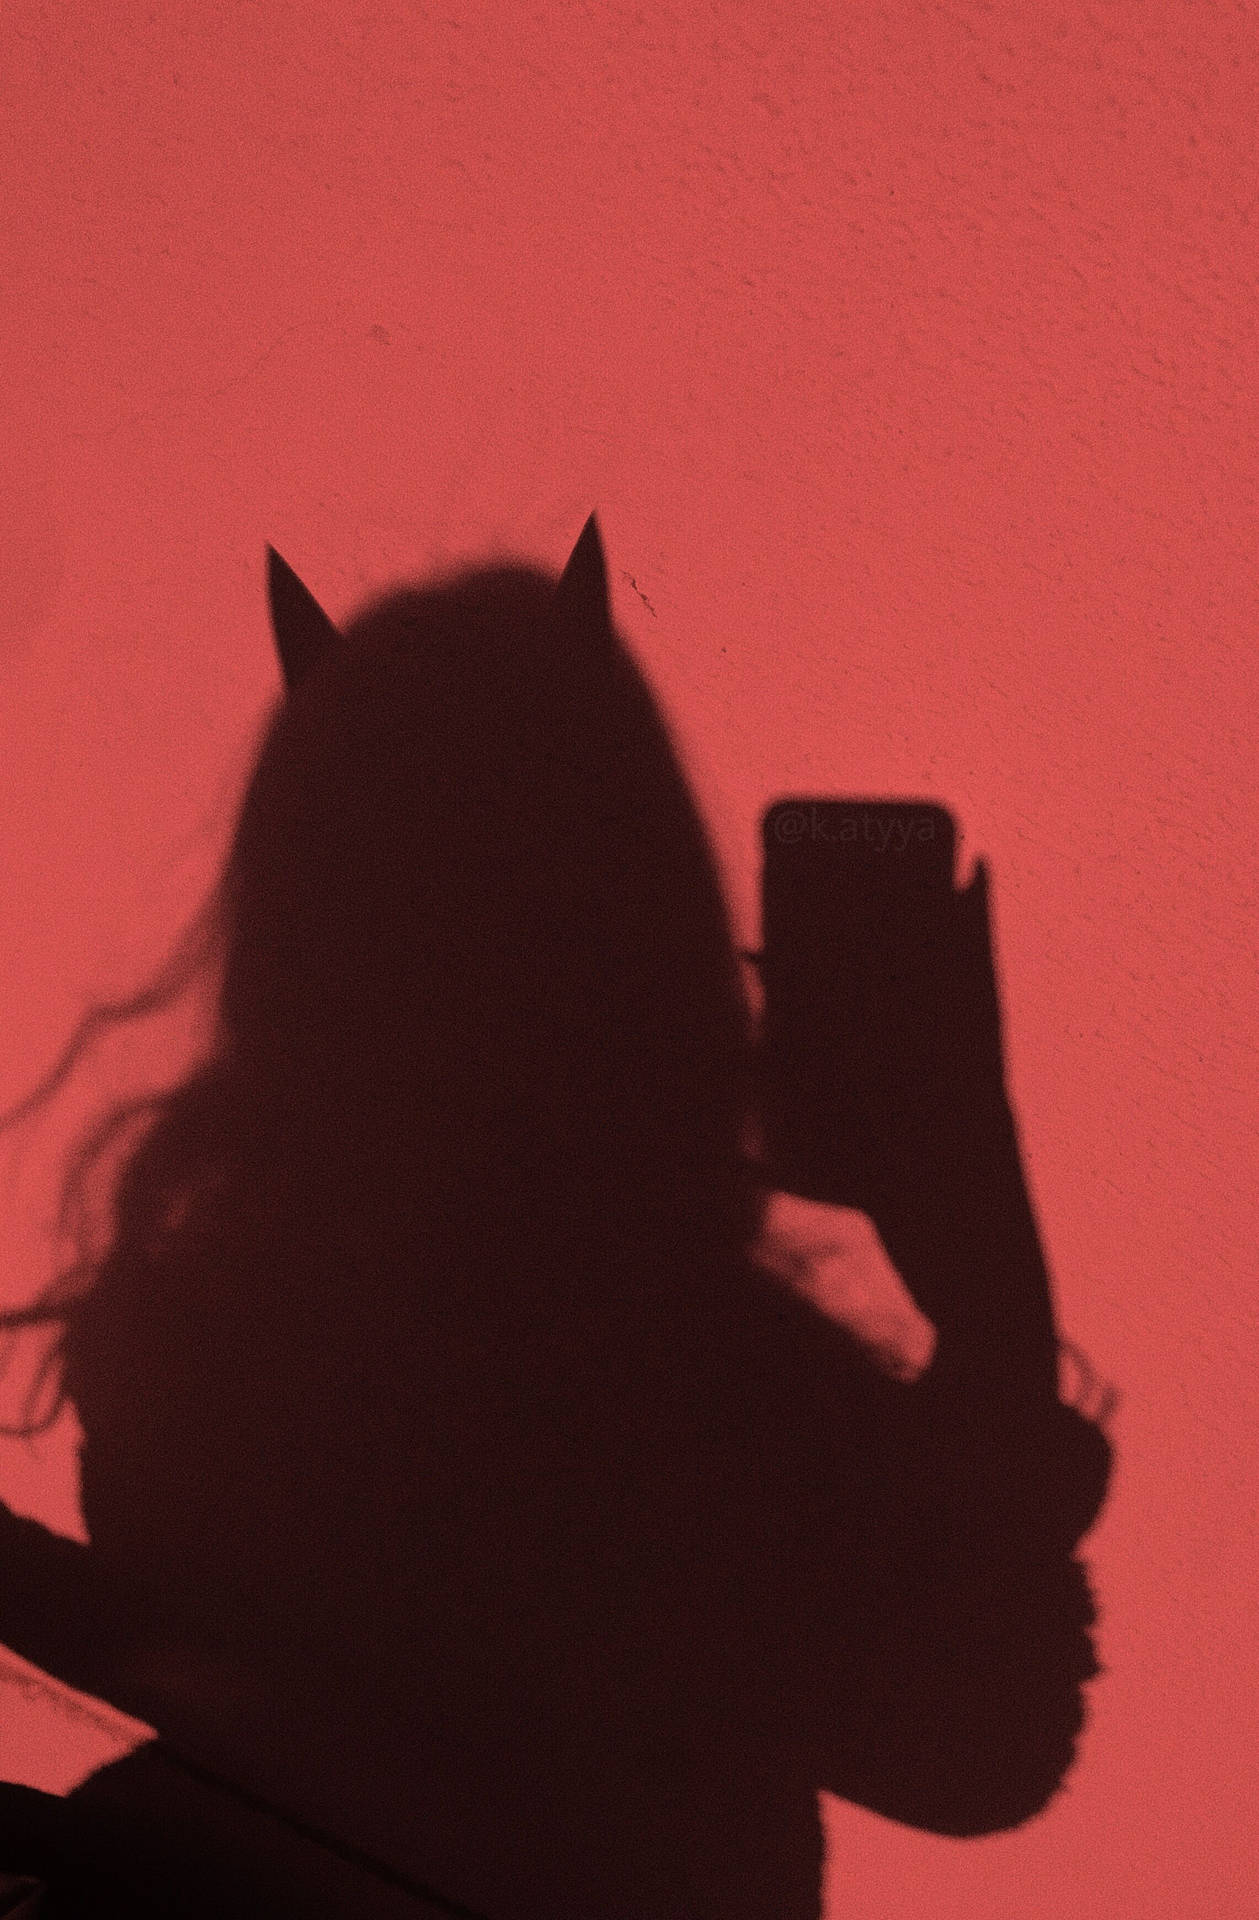 Caption: Surreal Aesthetic Profile - Devil Woman Shadow Background